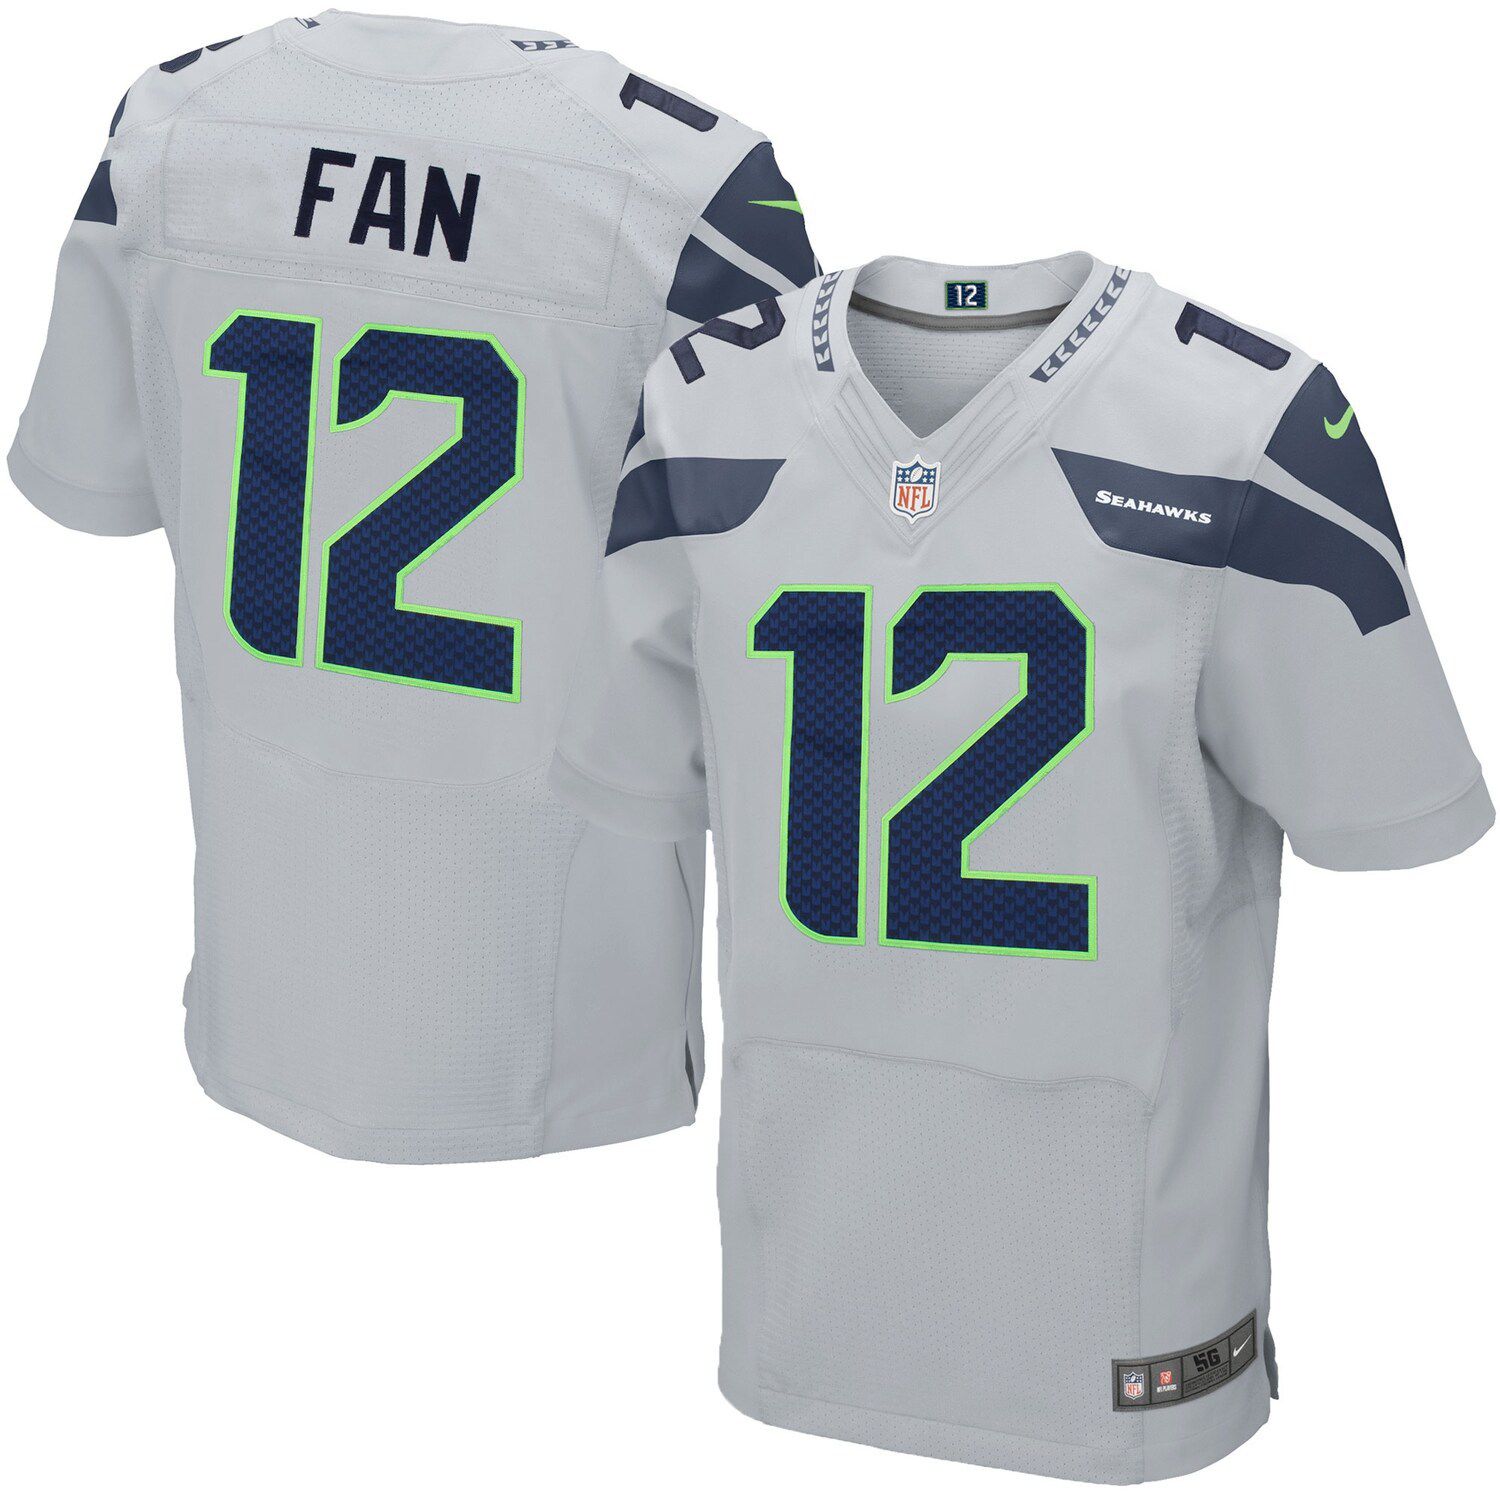 Nike NFL Seattle Seahawks Atmosphere (Jamal Adams) Men's Fashion Football Jersey - Grey XXL